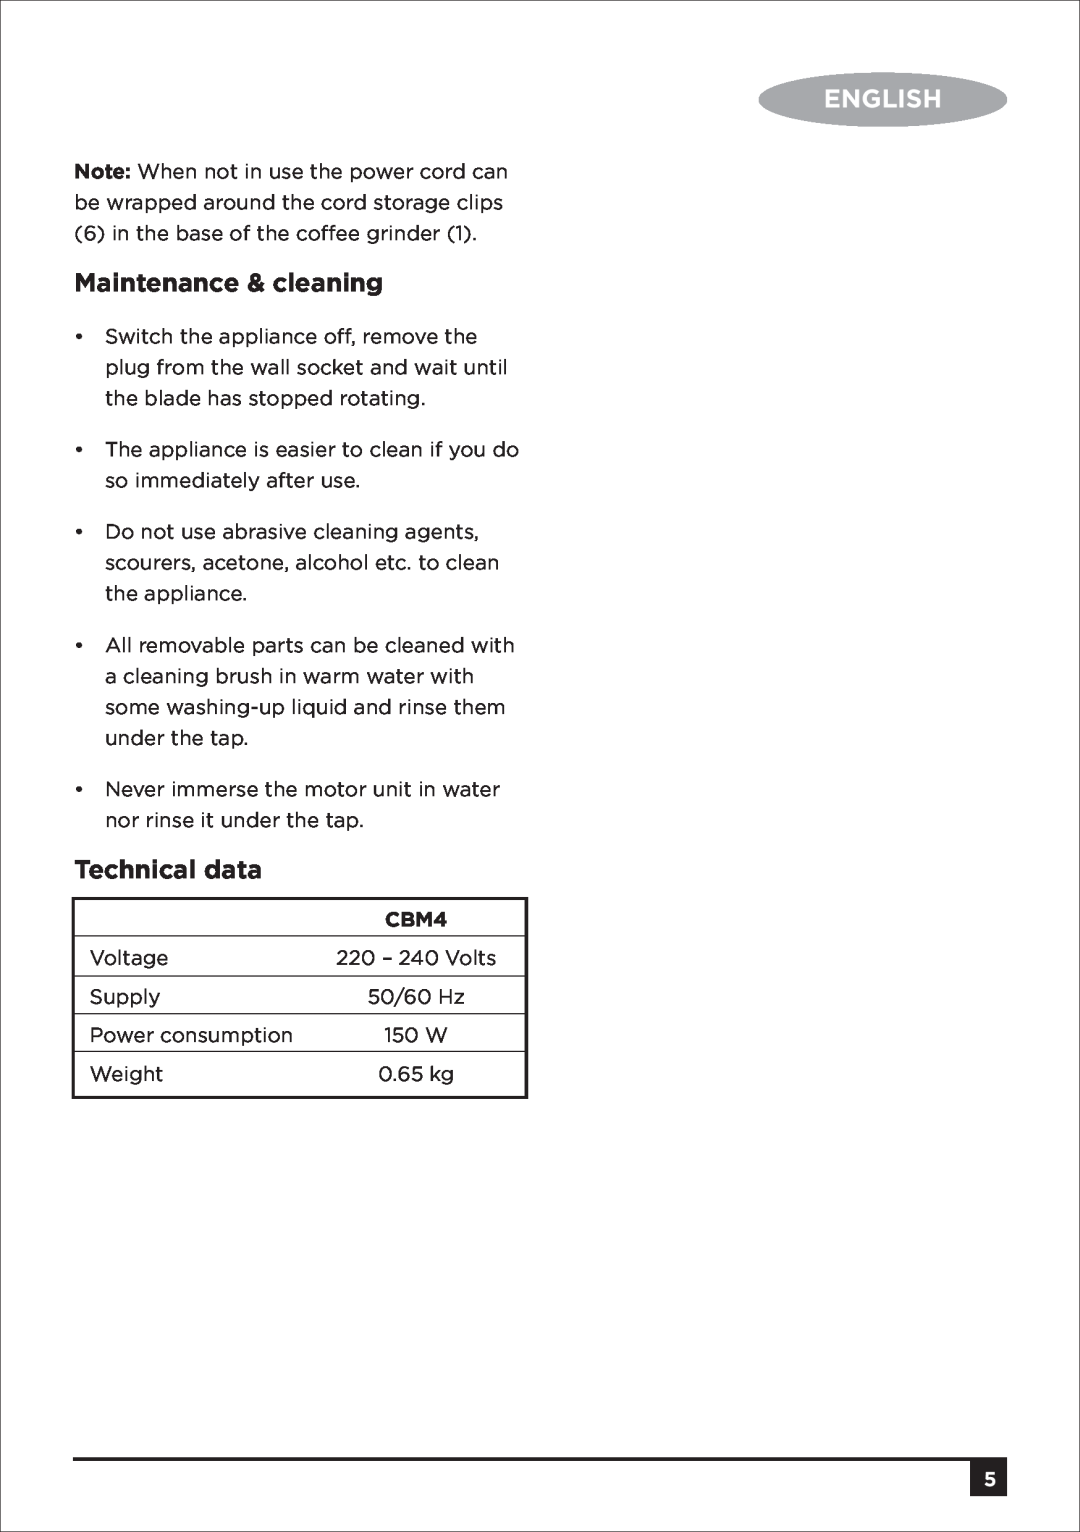 Black & Decker CBM4 manual English, Maintenance & cleaning, Technical data 